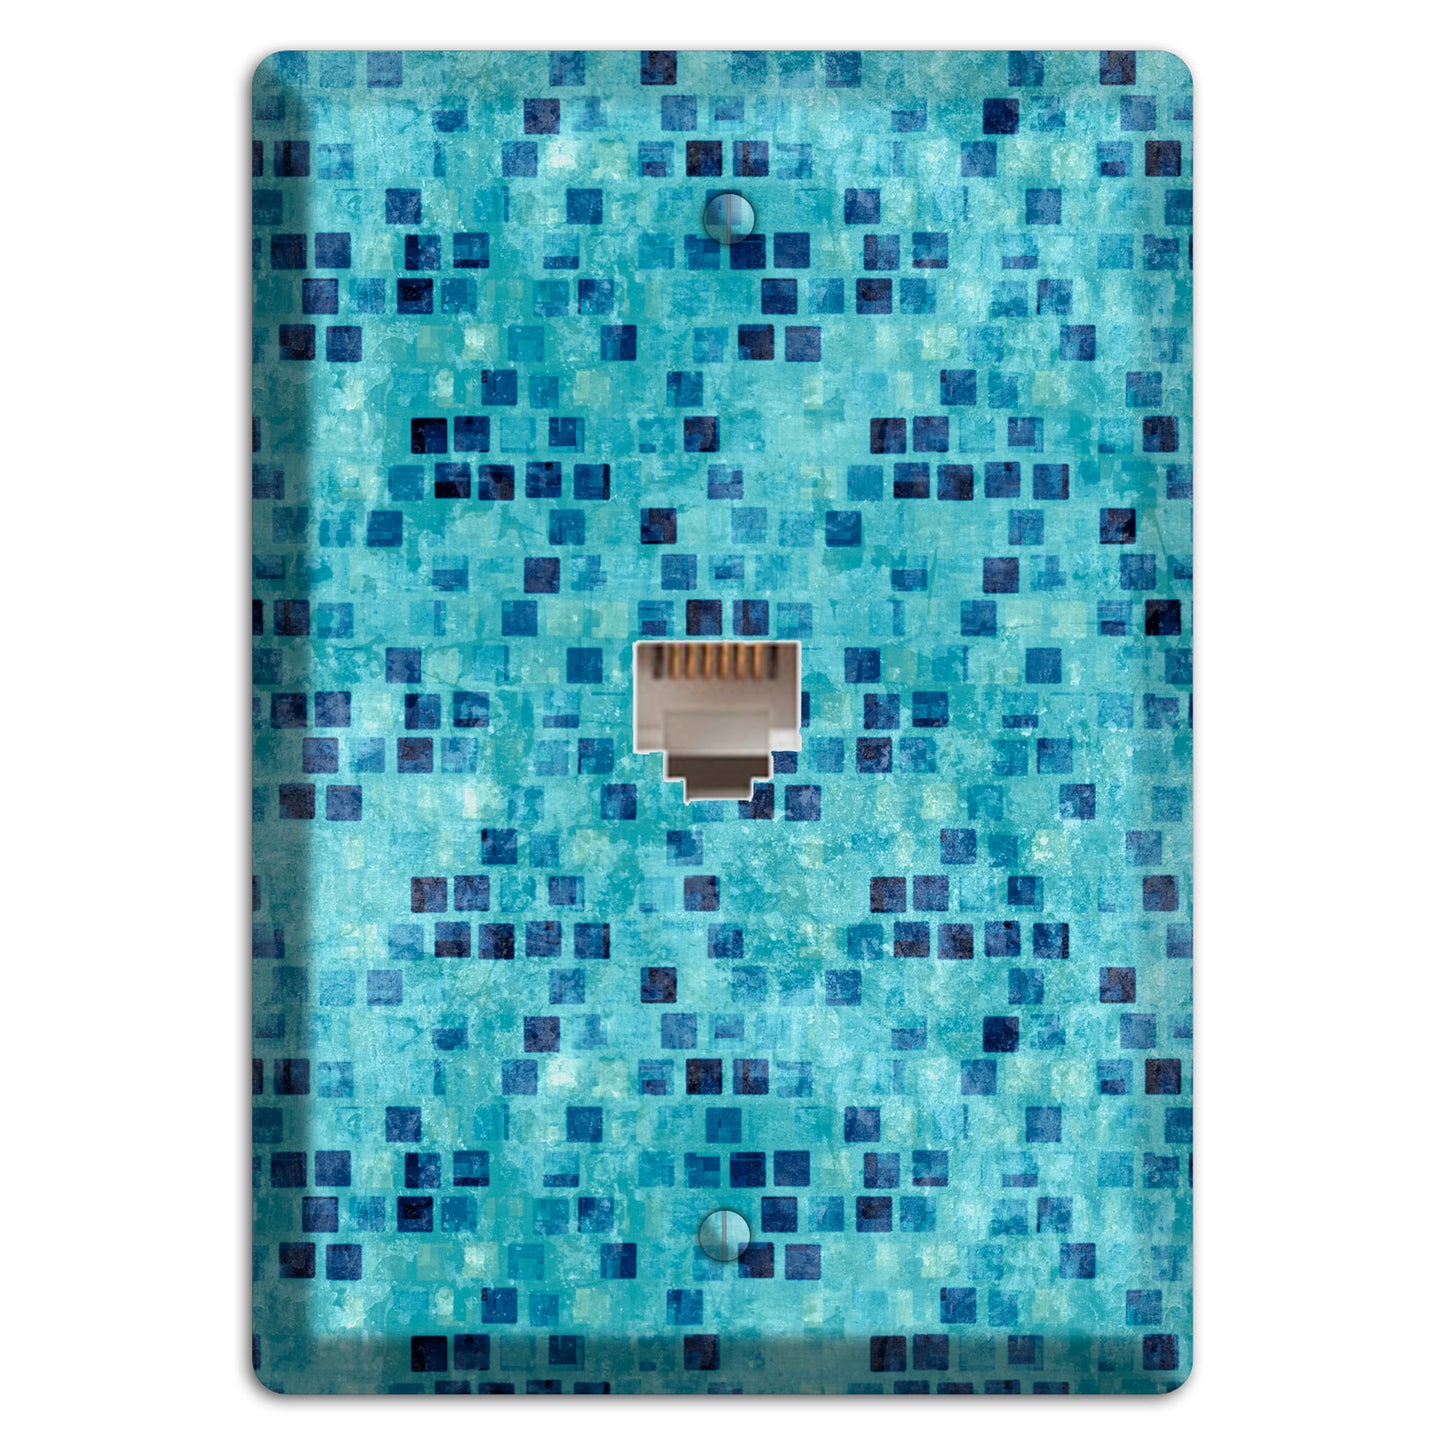 Turquoise Grunge Tile Phone Wallplate